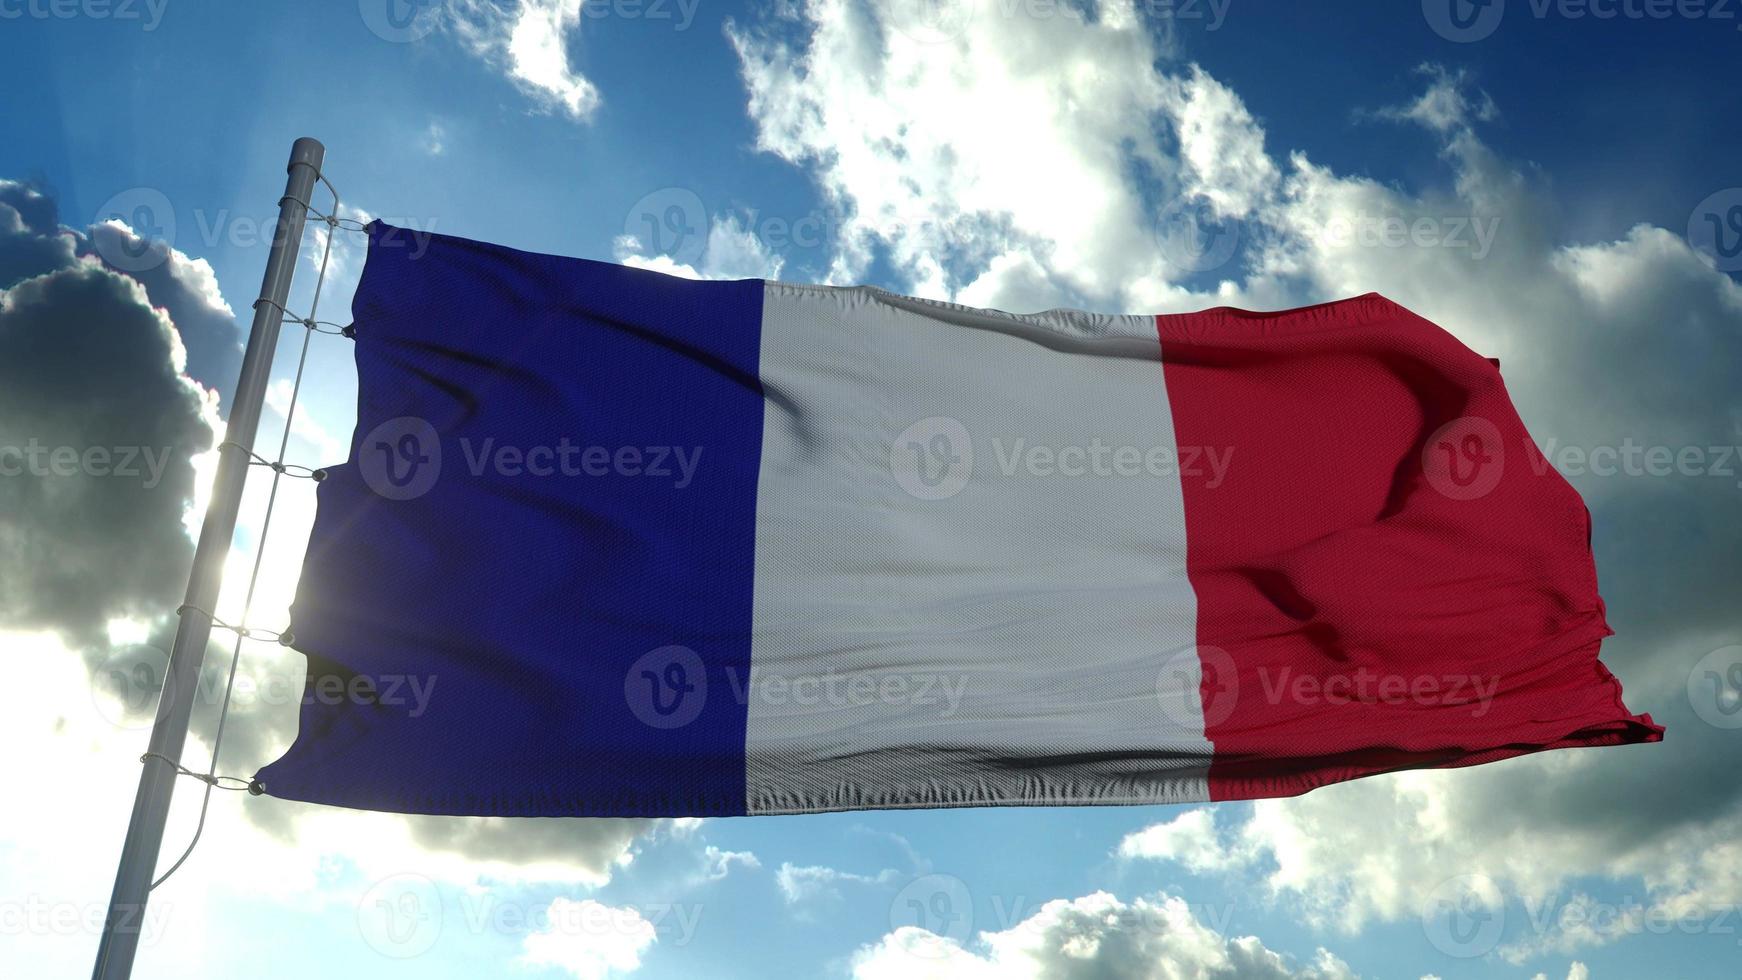 la bandiera nazionale della Francia sventola nel vento contro un cielo blu. rendering 3D foto